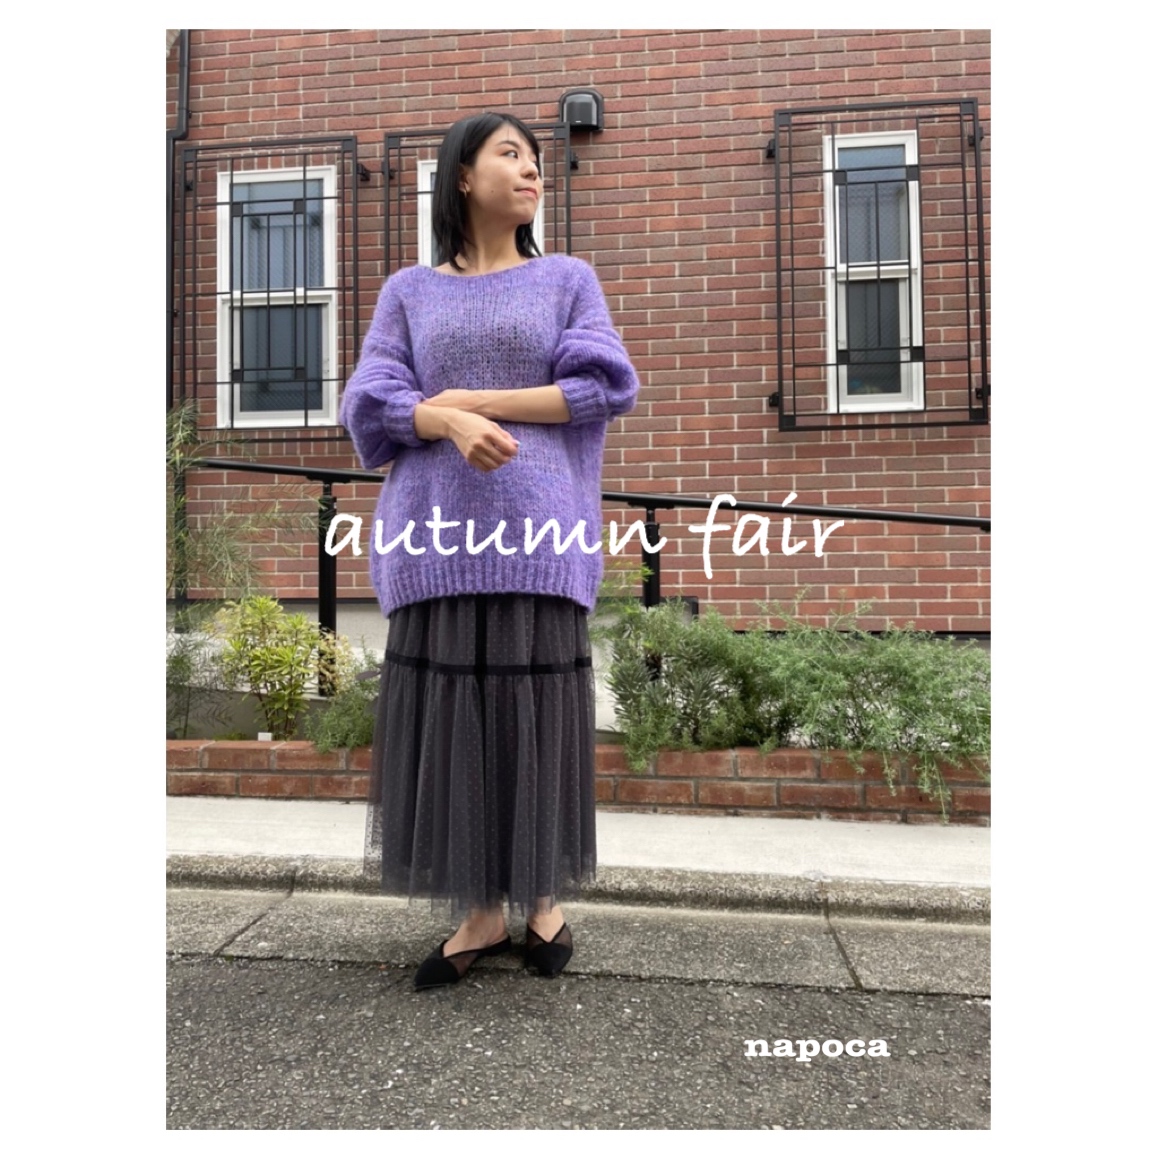 ☆ autumn fair ☆ 新作10%OFF ☆